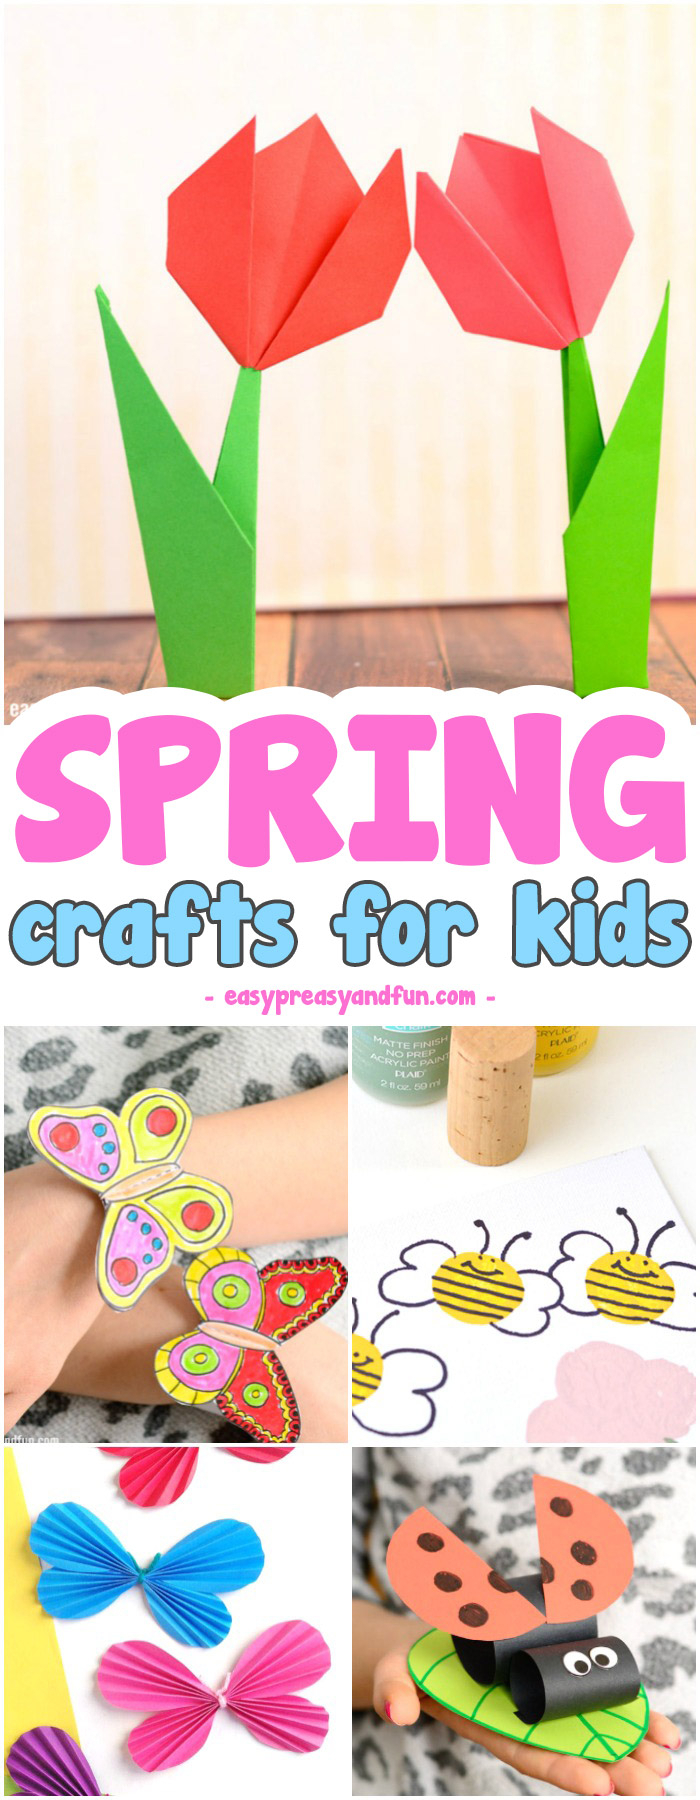 10 Unique Ideas For Crafts For Kids spring crafts for kids art and craft project ideas for all ages 6 2024